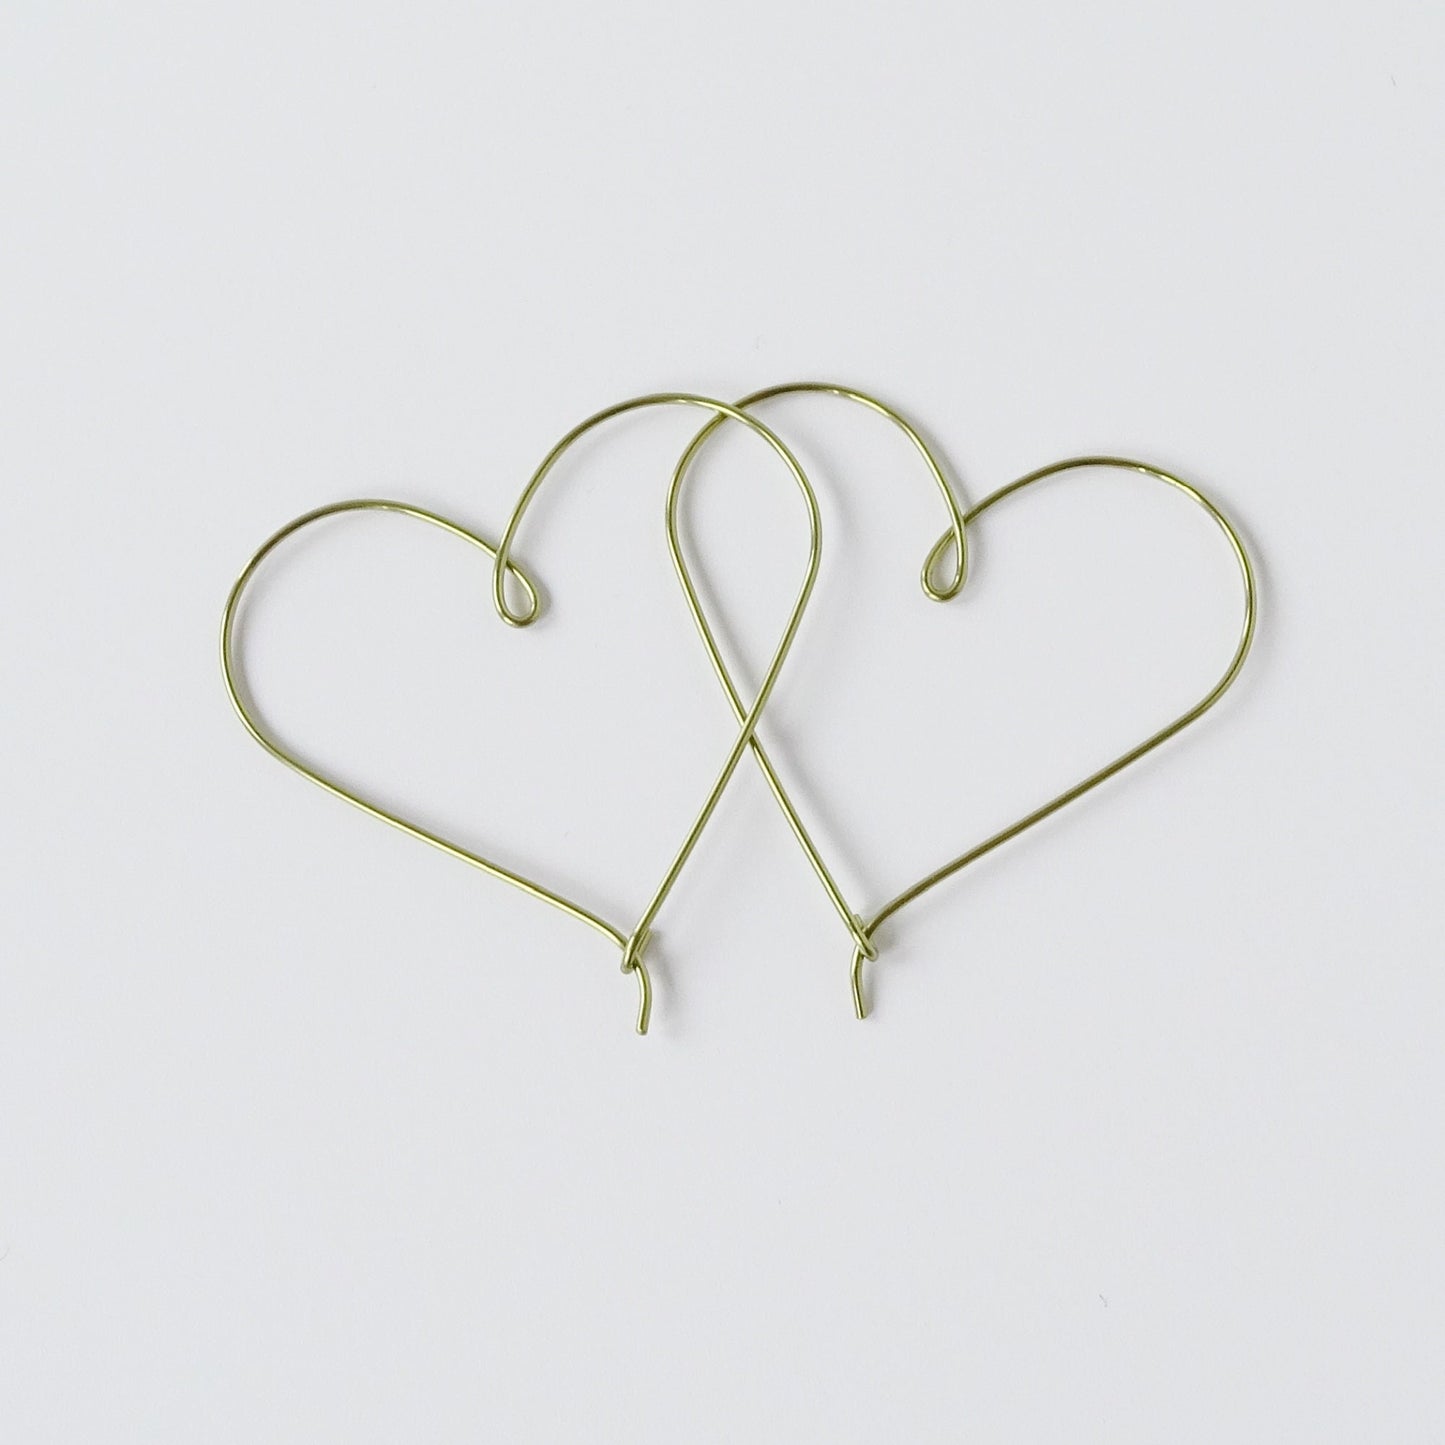 Medium Heart Hoops Gold Niobium Hoop Earrings, Nickel Free Hypoallergenic Yellow Gold Anodized Niobium Heart Hoop, Sensitive Ears Earrings